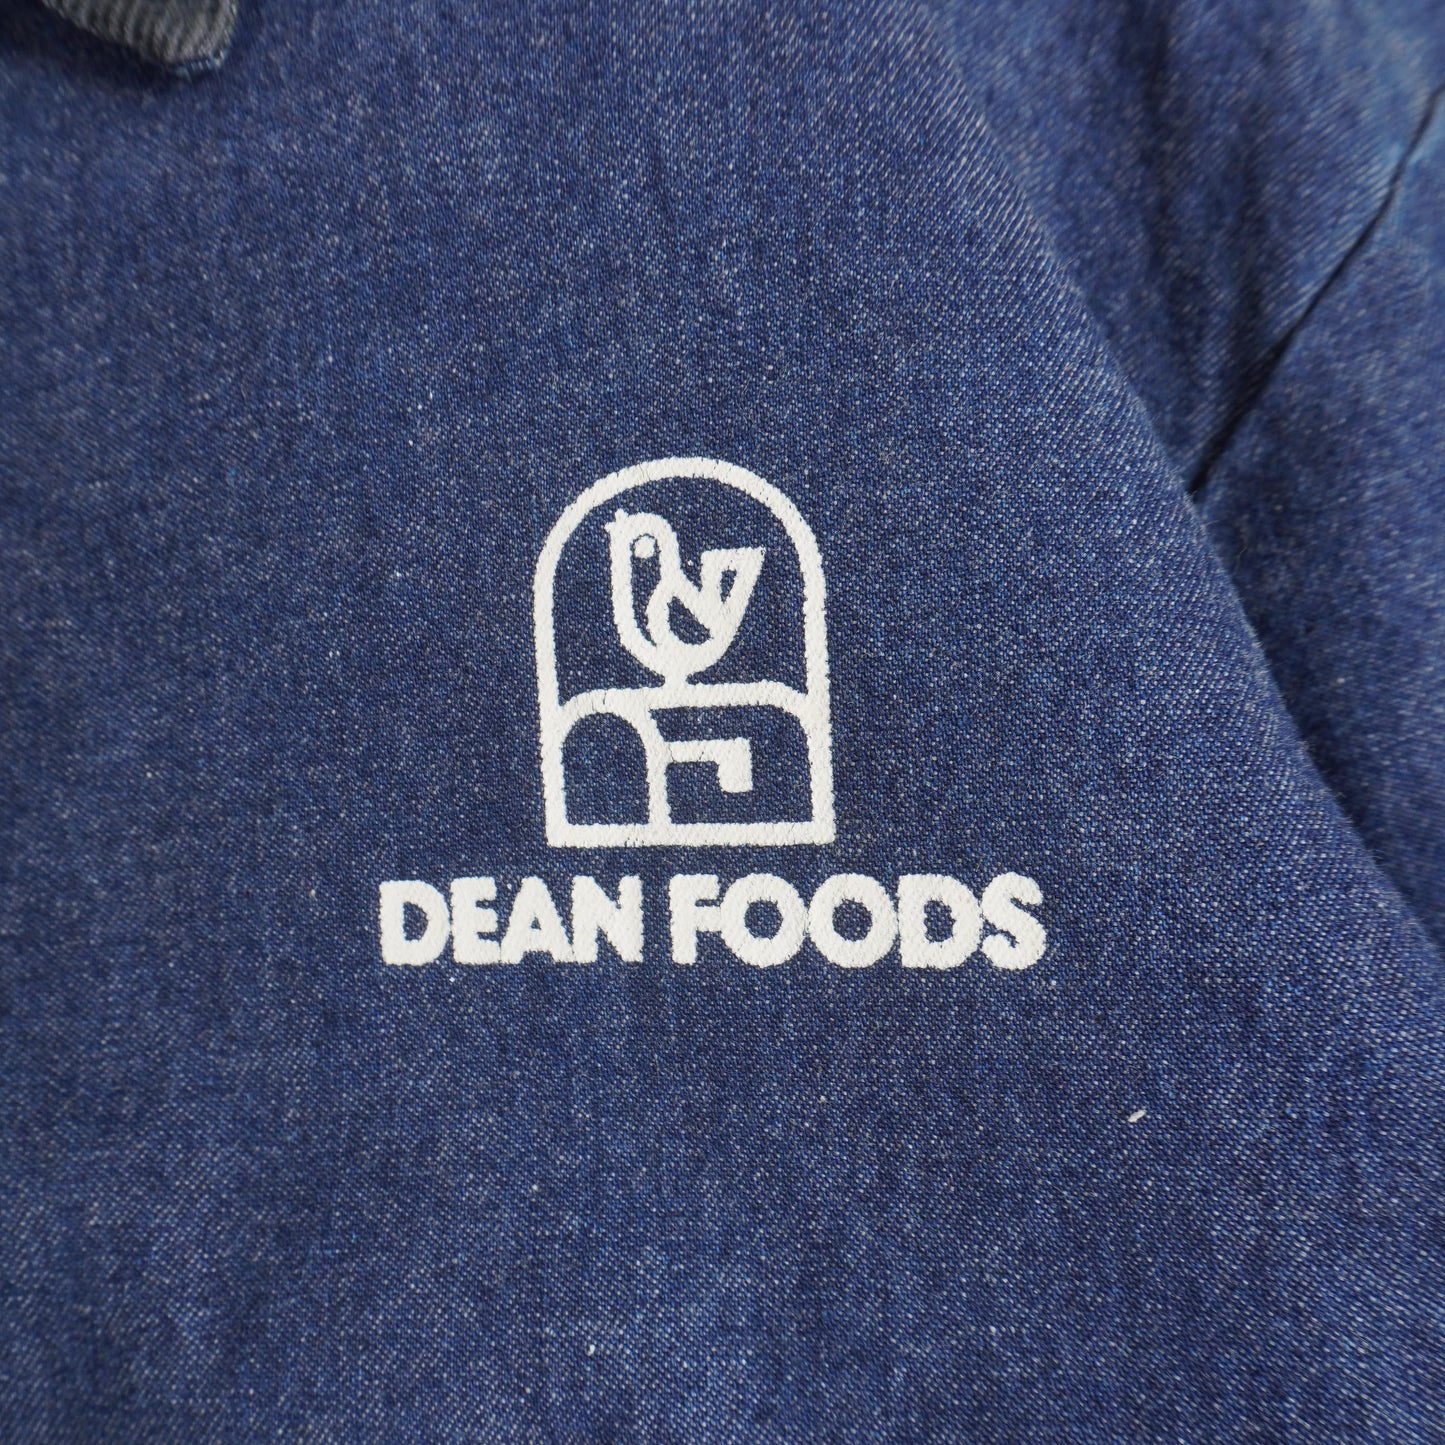 1980s DEAN FOODS WORK JACKET - L